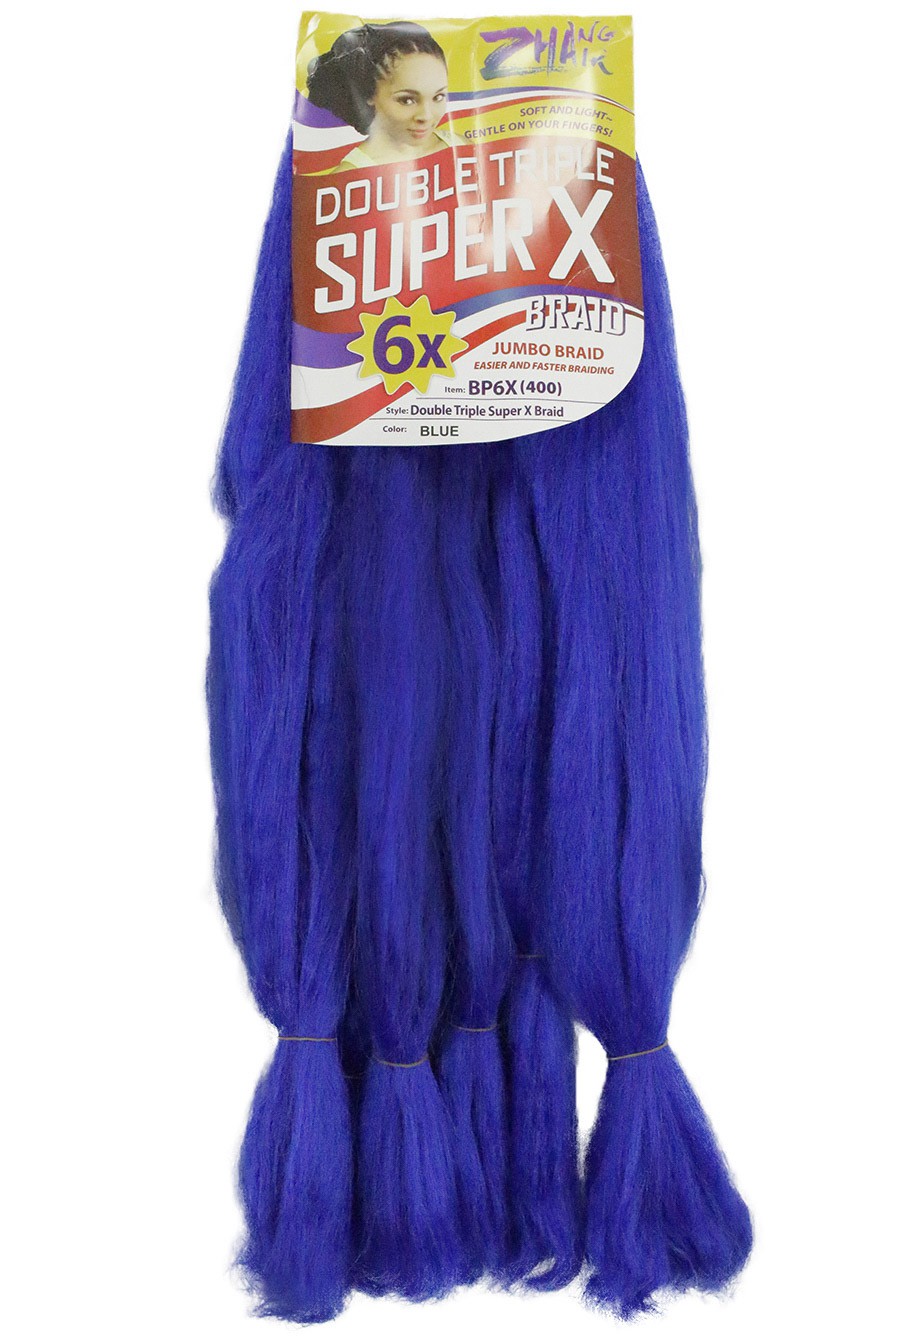 Cabelo Sintético - Zhang hair jumbo - Super X (400g) - Cor: Azul